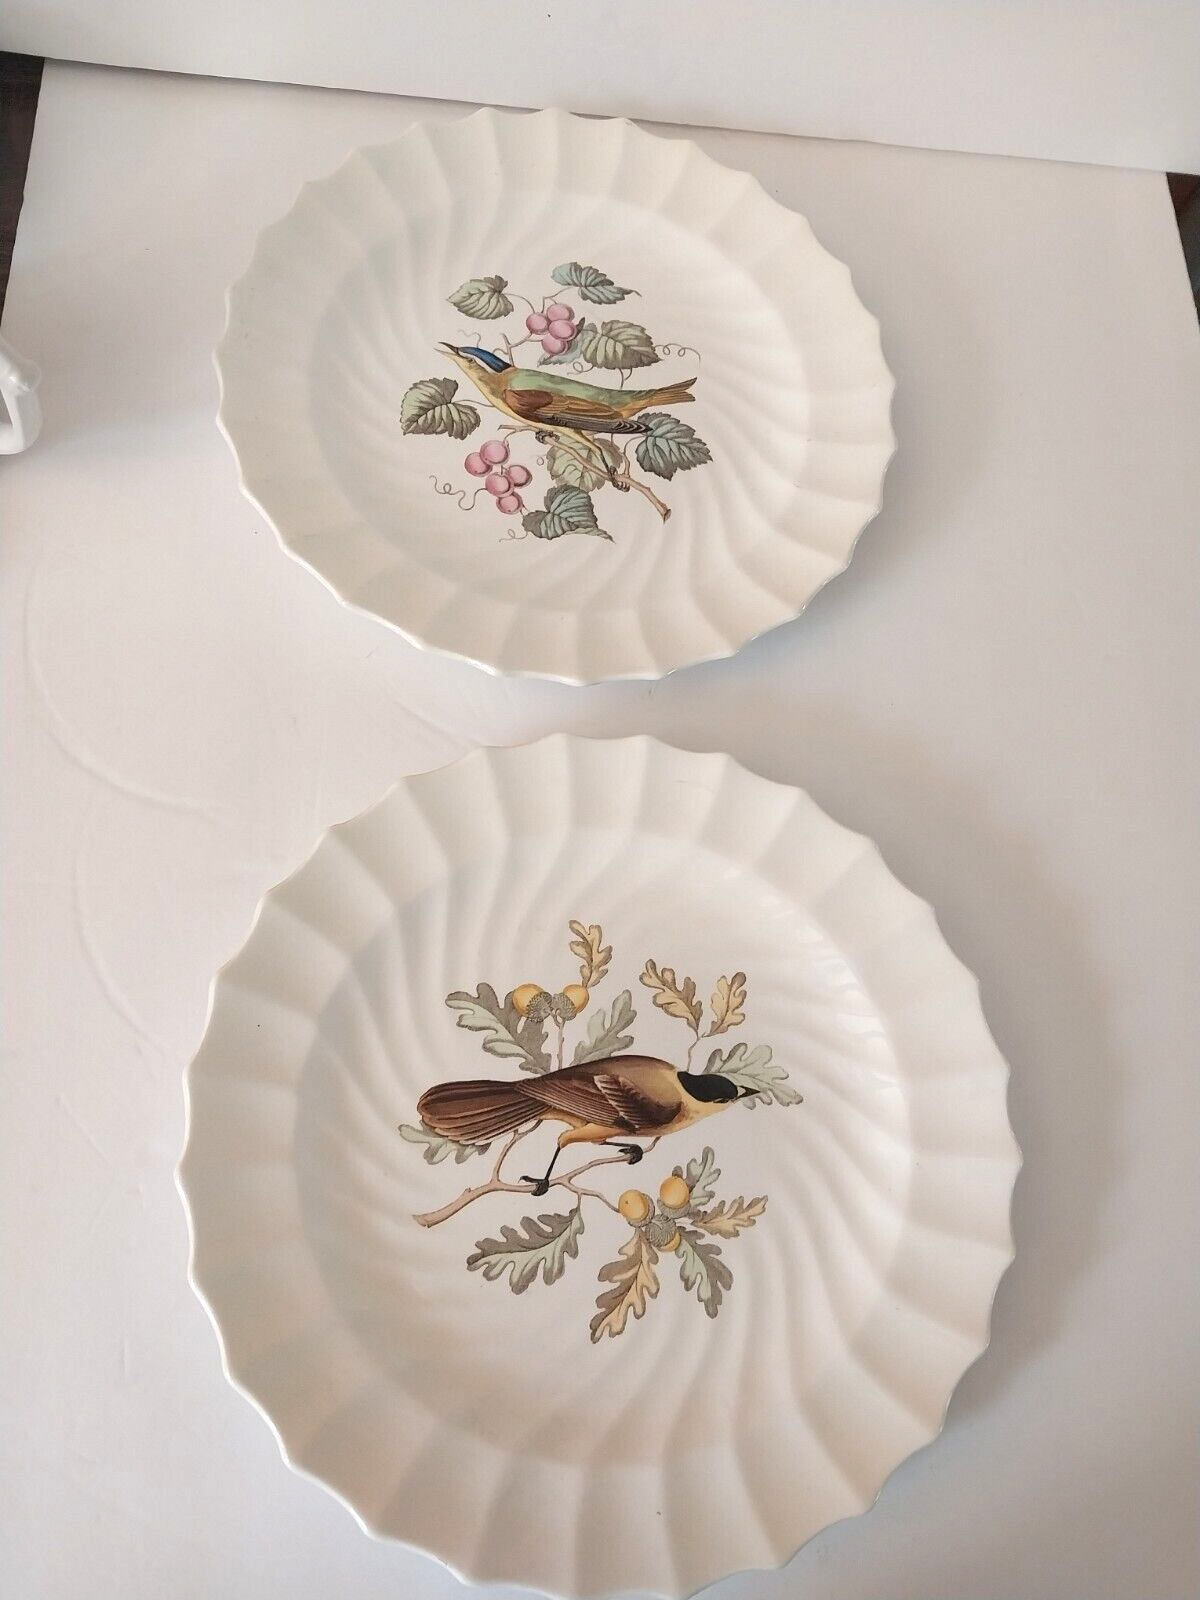 Copeland Spode England Scallop Bird Dinner Plates - SET OF 2 display